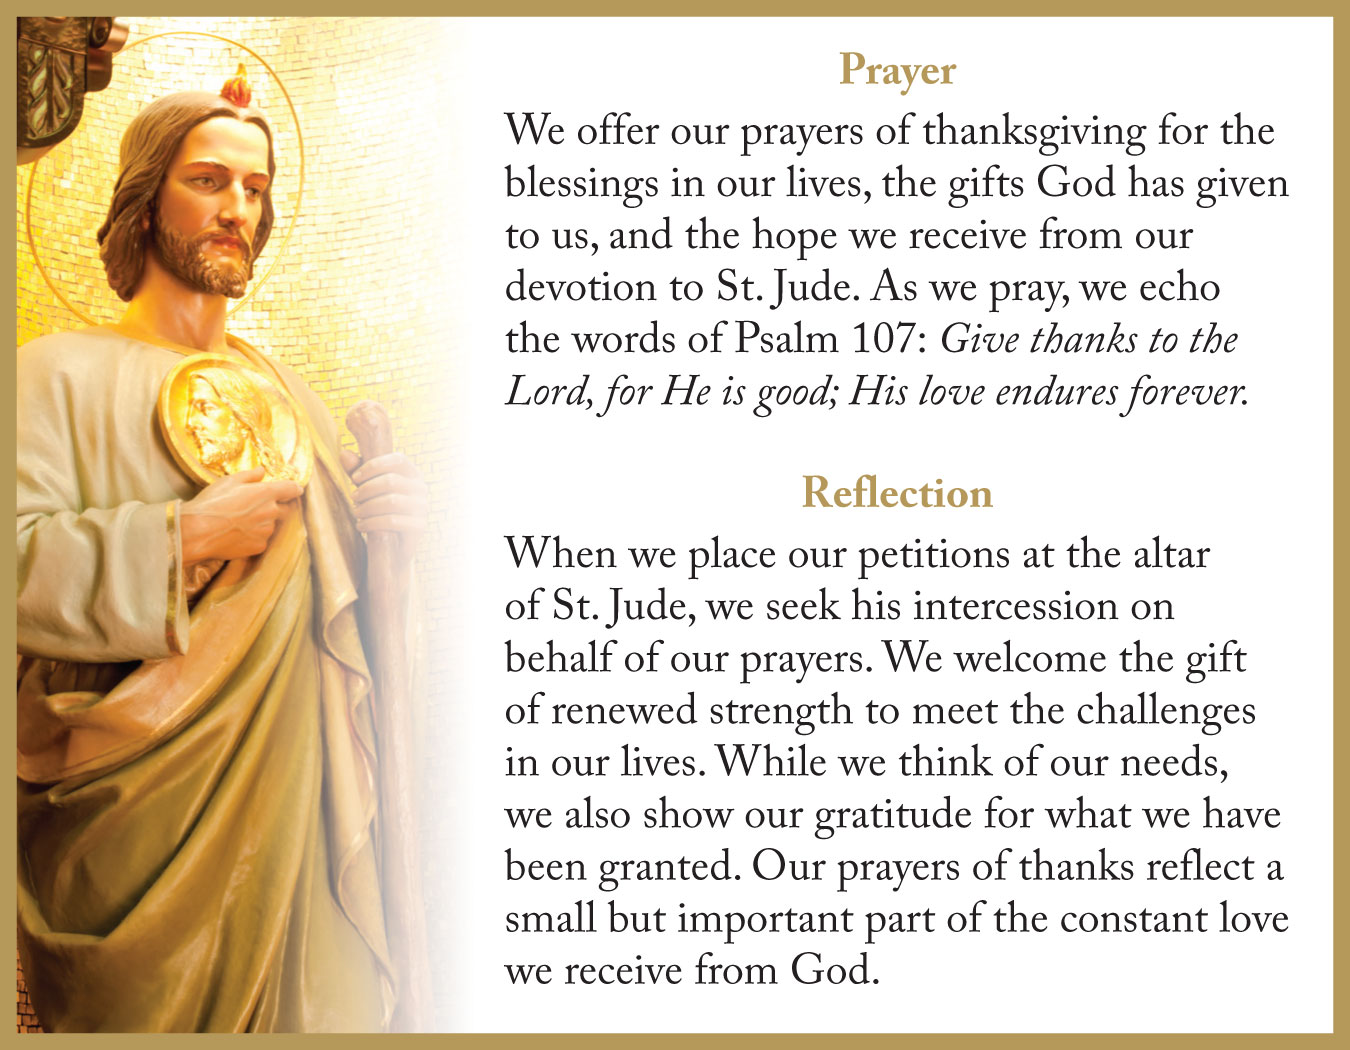 A St. Jude Prayer & Reflection